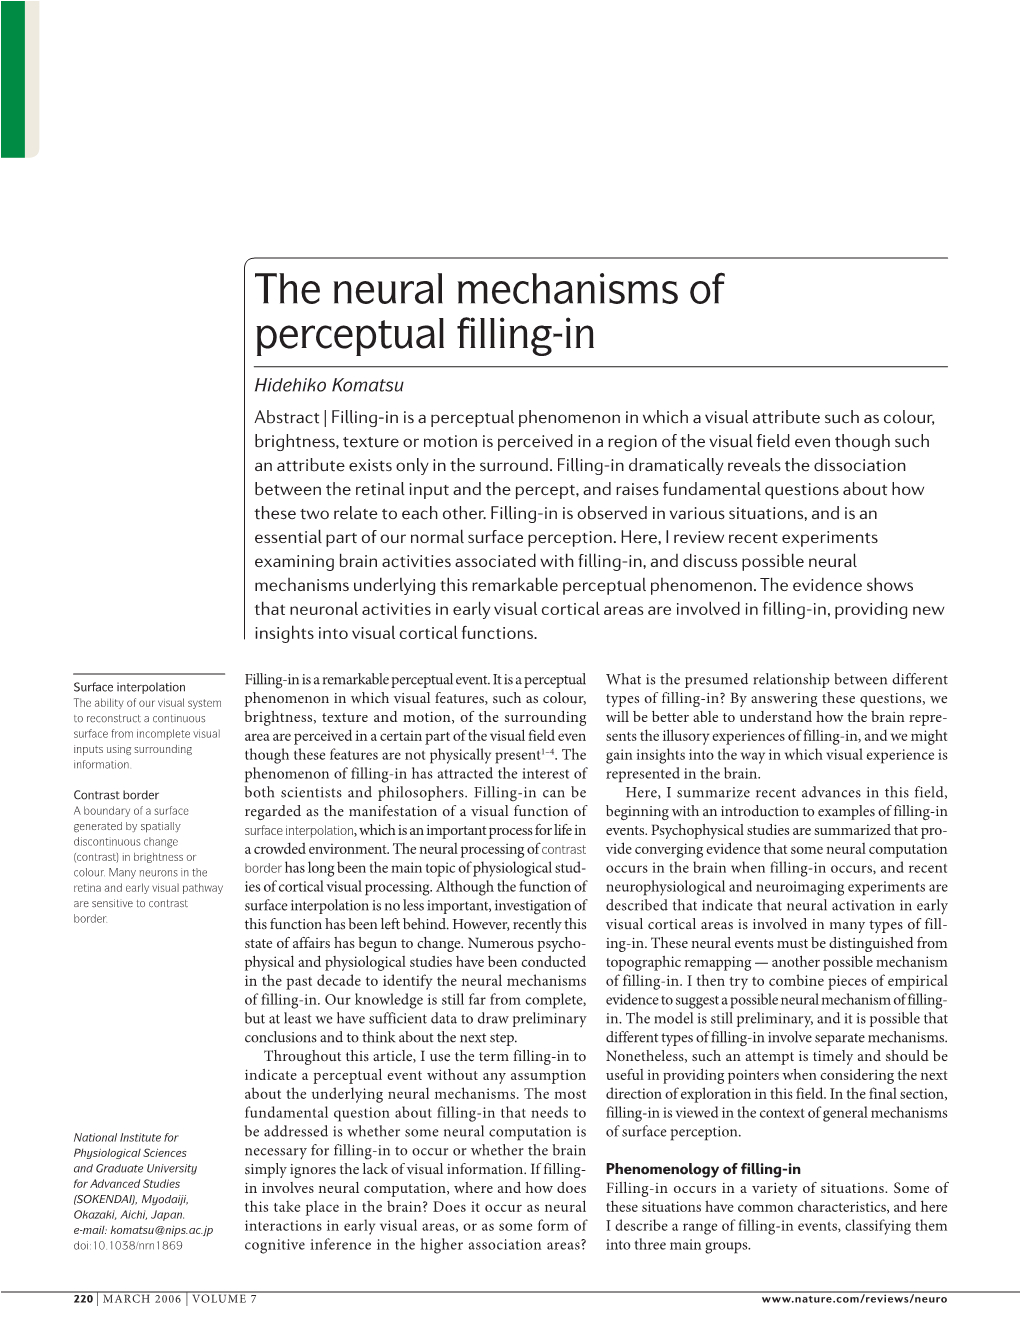 The Neural Mechanisms of Perceptual Filling-In